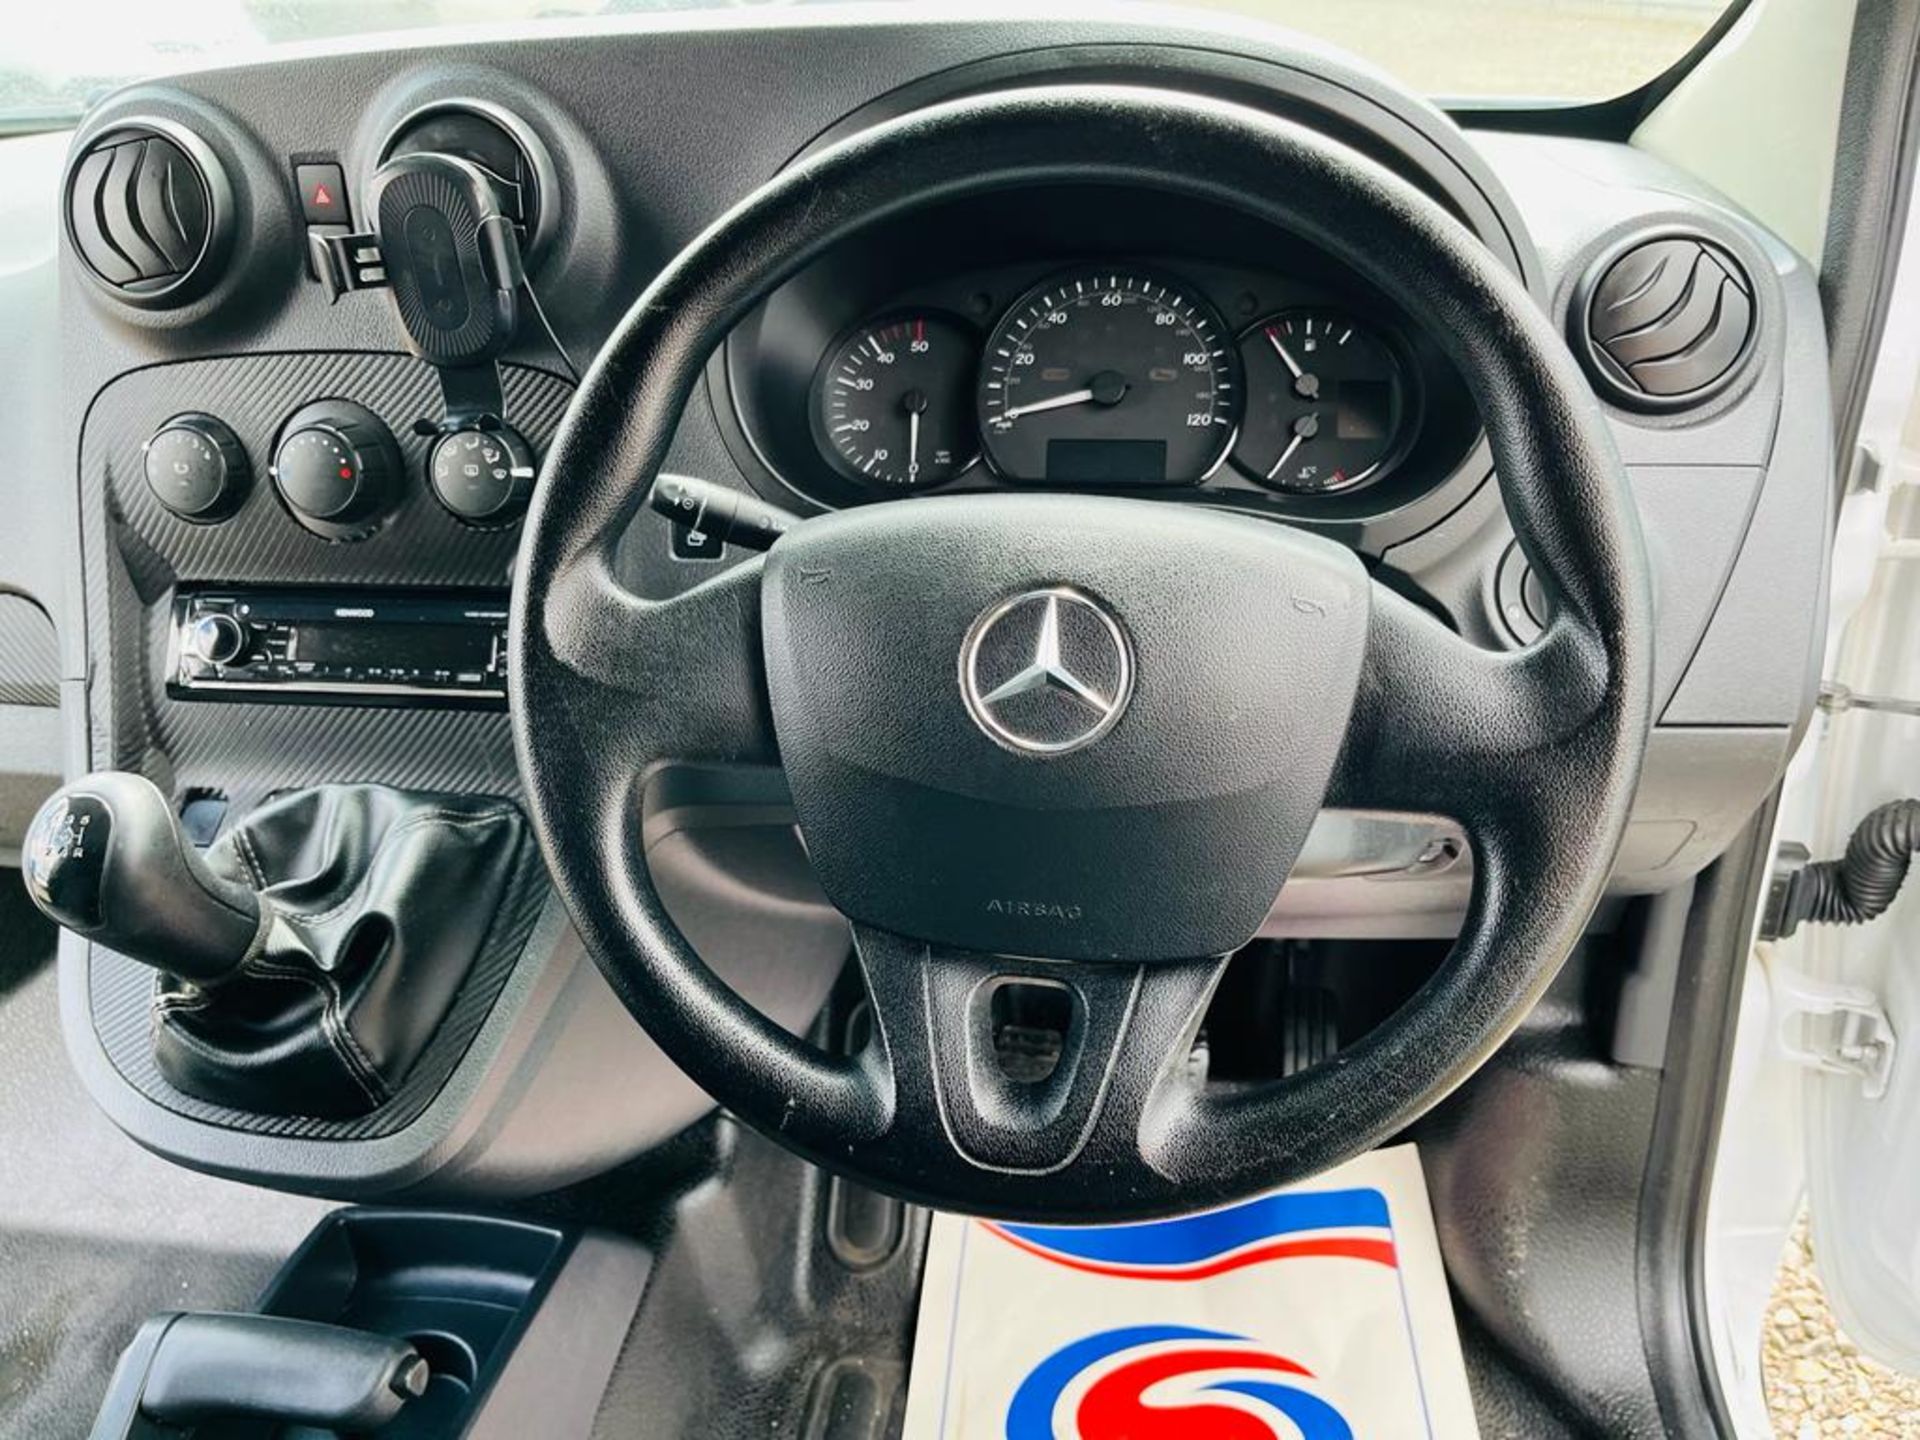 ** ON SALE ** Mercedes Benz Citan 1.5 CDI 109 LWB 2014 '14 Reg' - Panel Van - NO VAT - Image 18 of 26